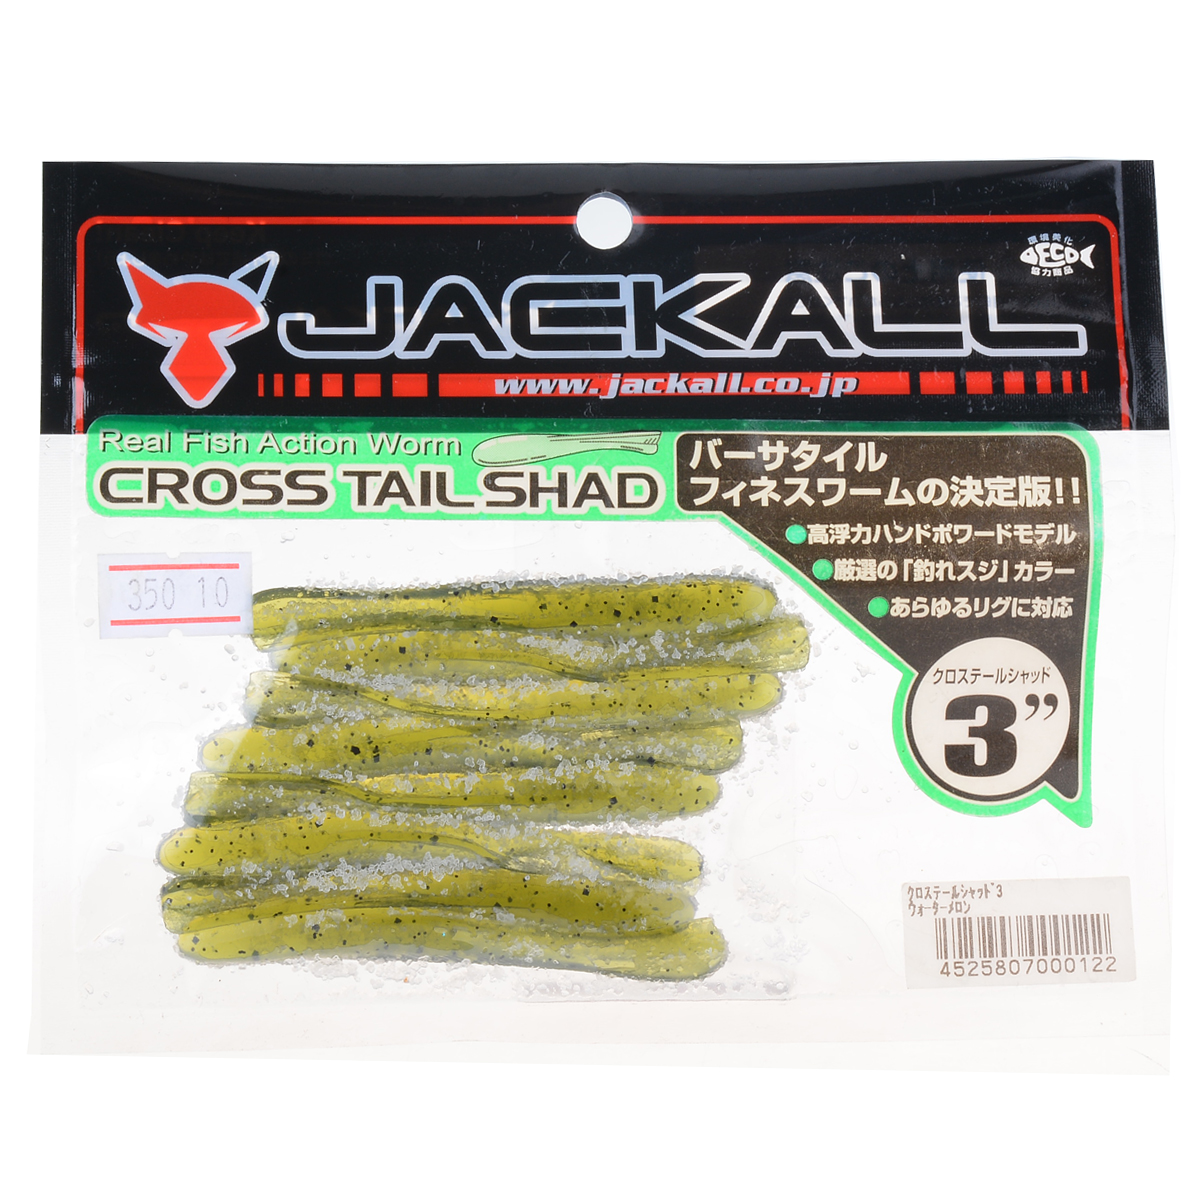 Jackall Cross Tail Shad 3 #0122*เหยื่อหนอนยาง - 7 SEAS PROSHOP (THAILAND)